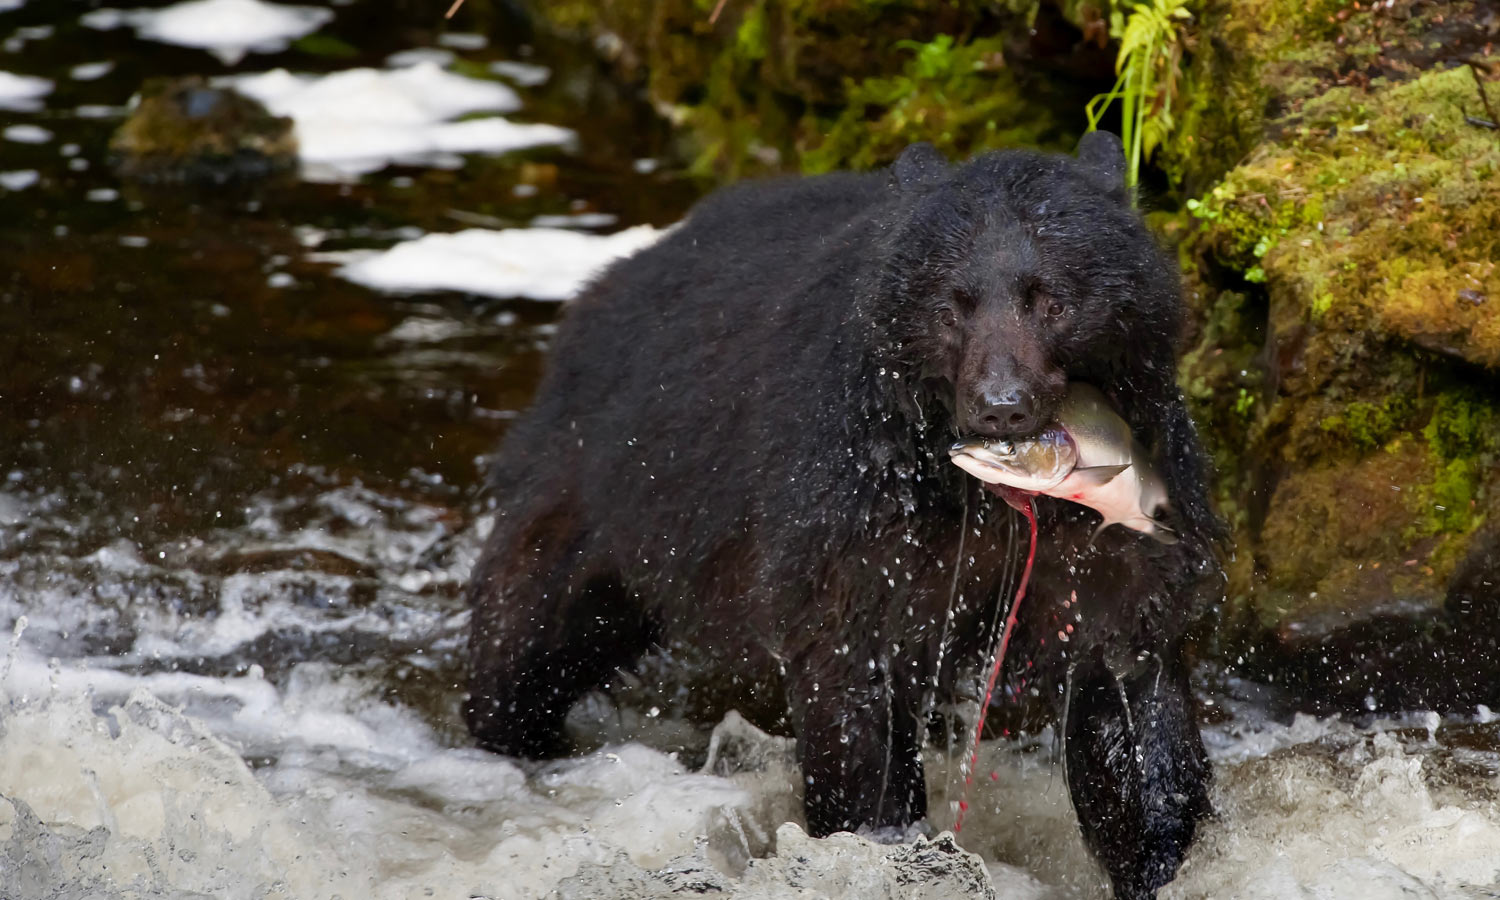 Black Bear Eating Salmon